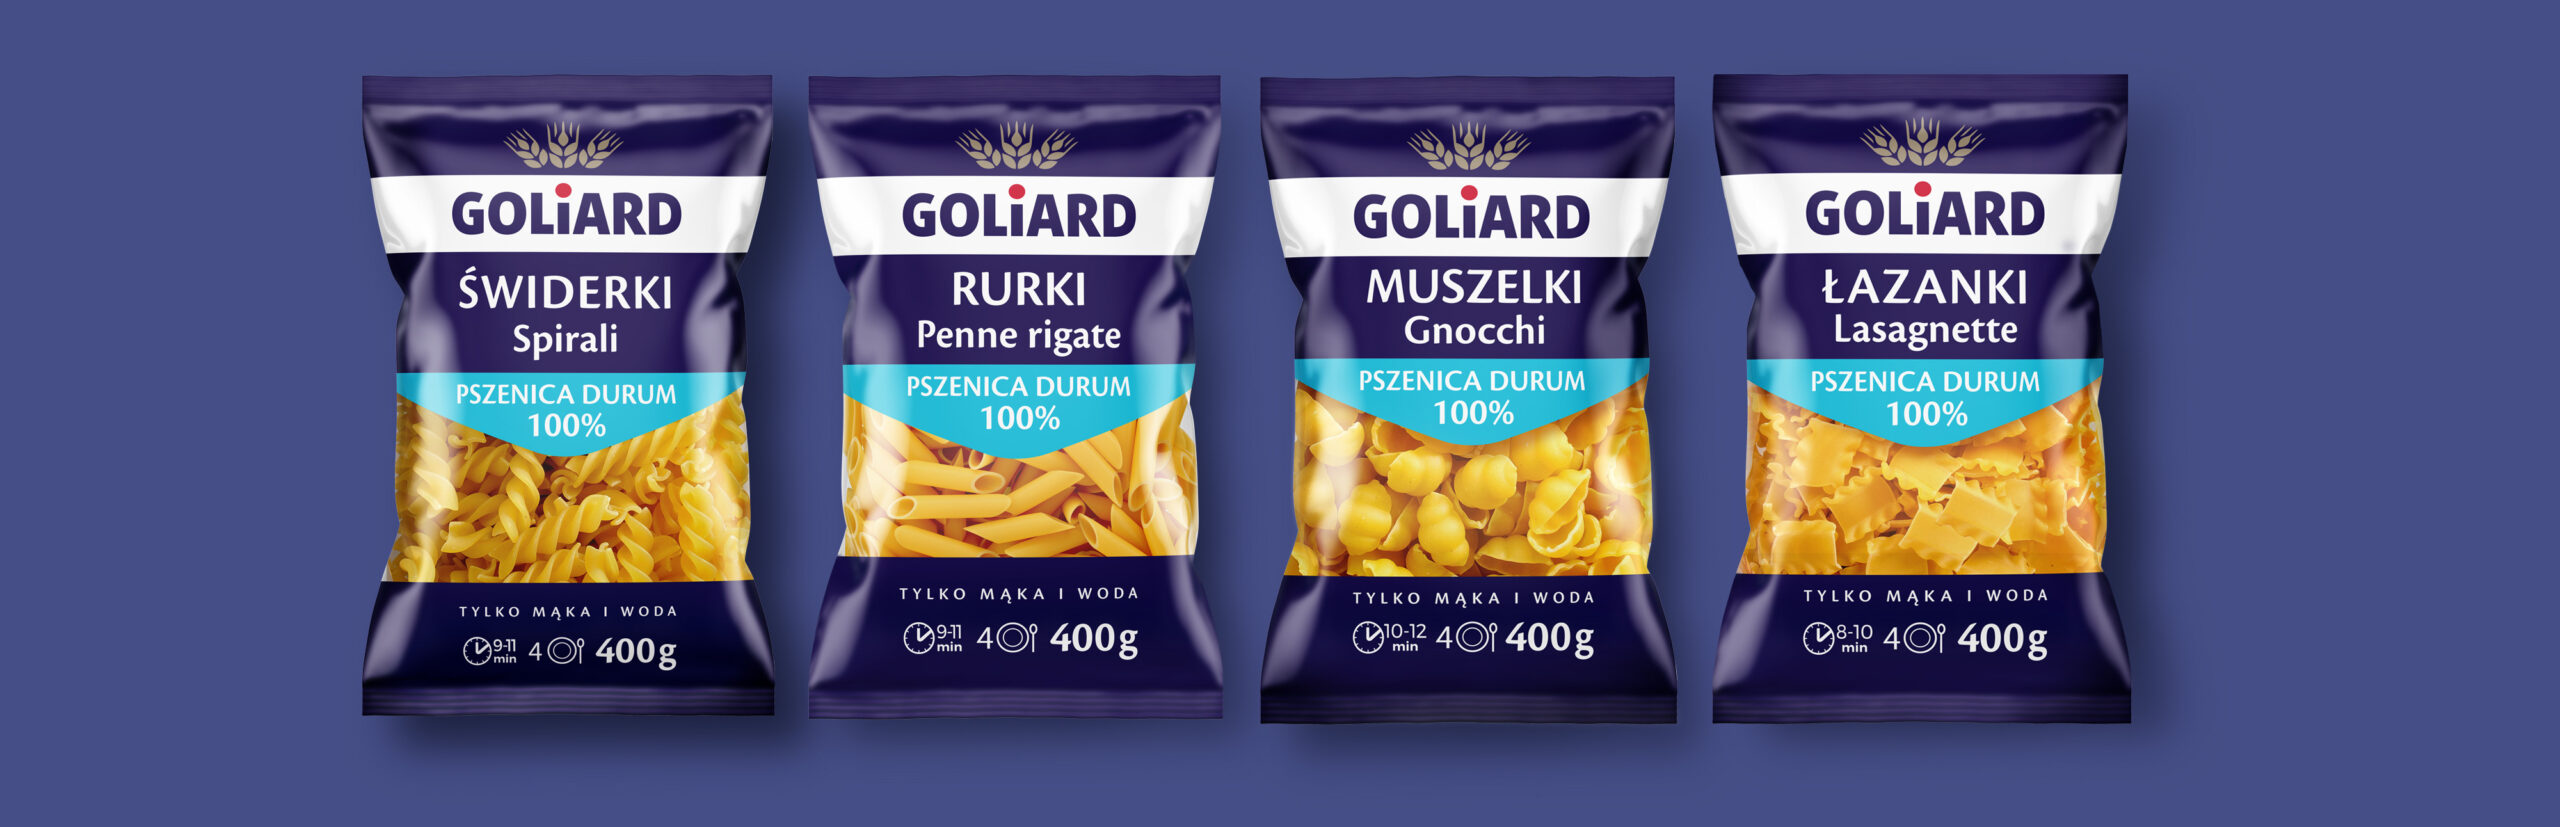 Pasta packaging design for Goliard - durum wheat line.